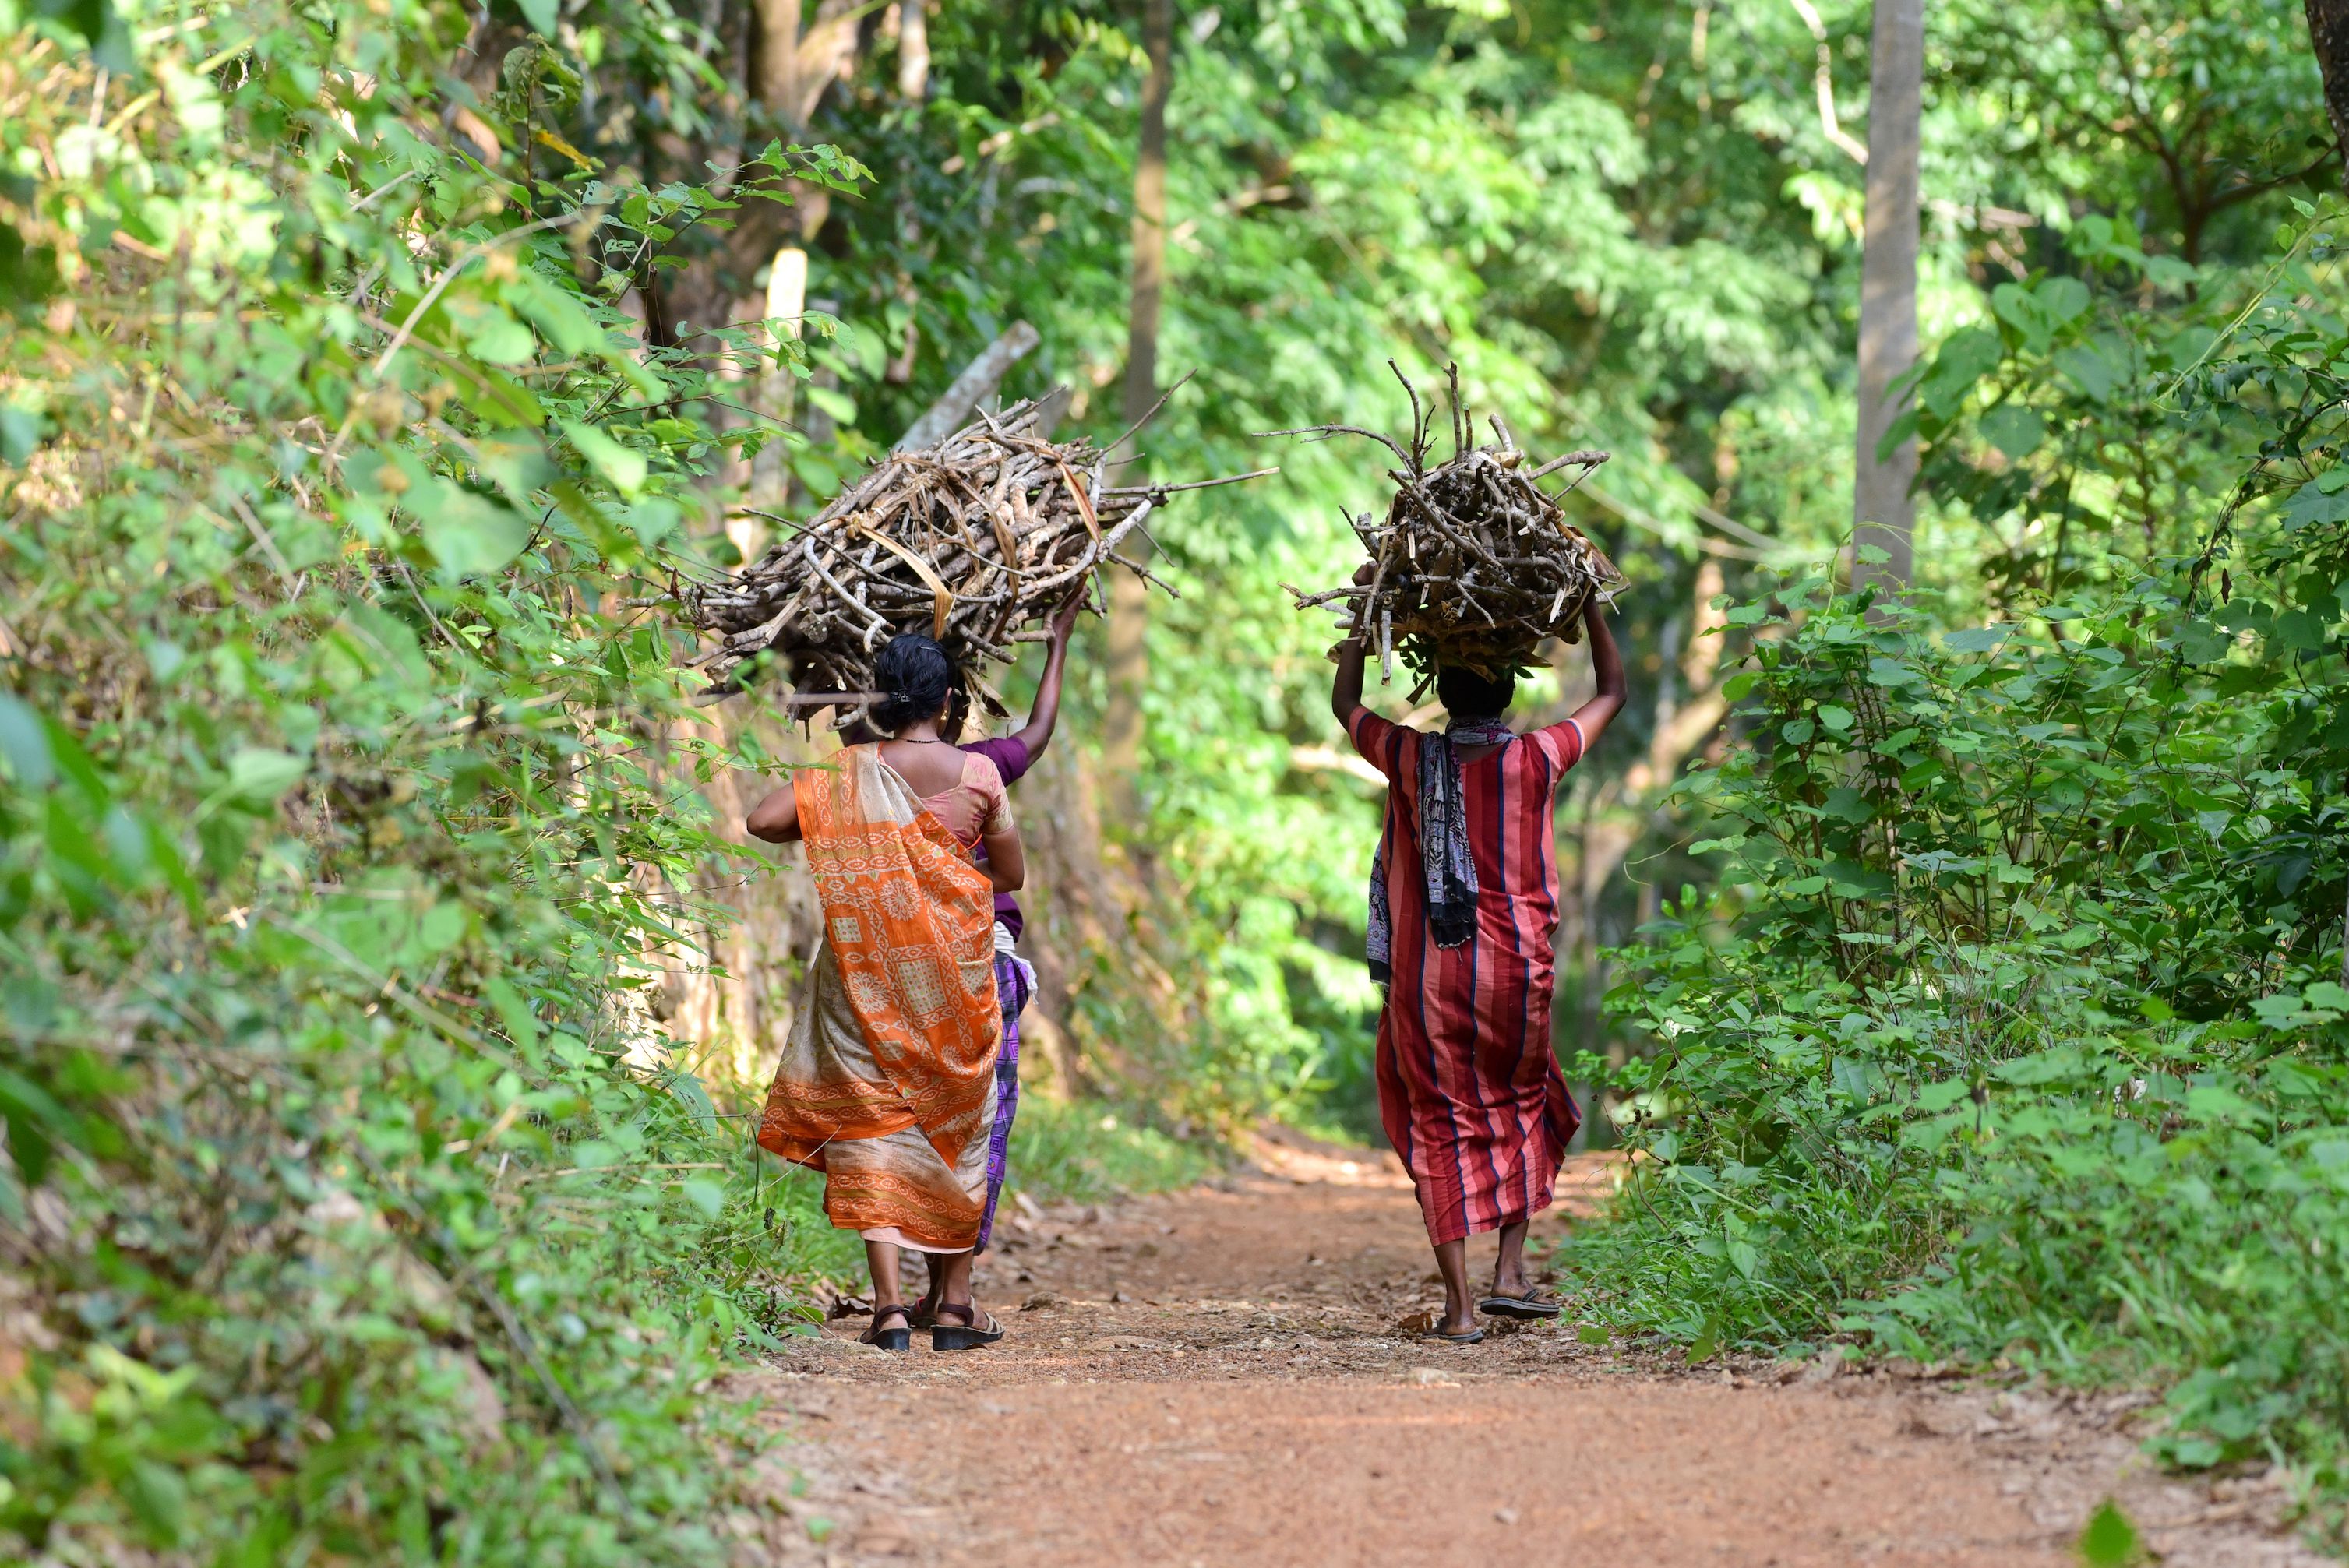 Women carrying fire wood in India. Undated. Image by shutterstock/Pradeep Krishnan G.R.